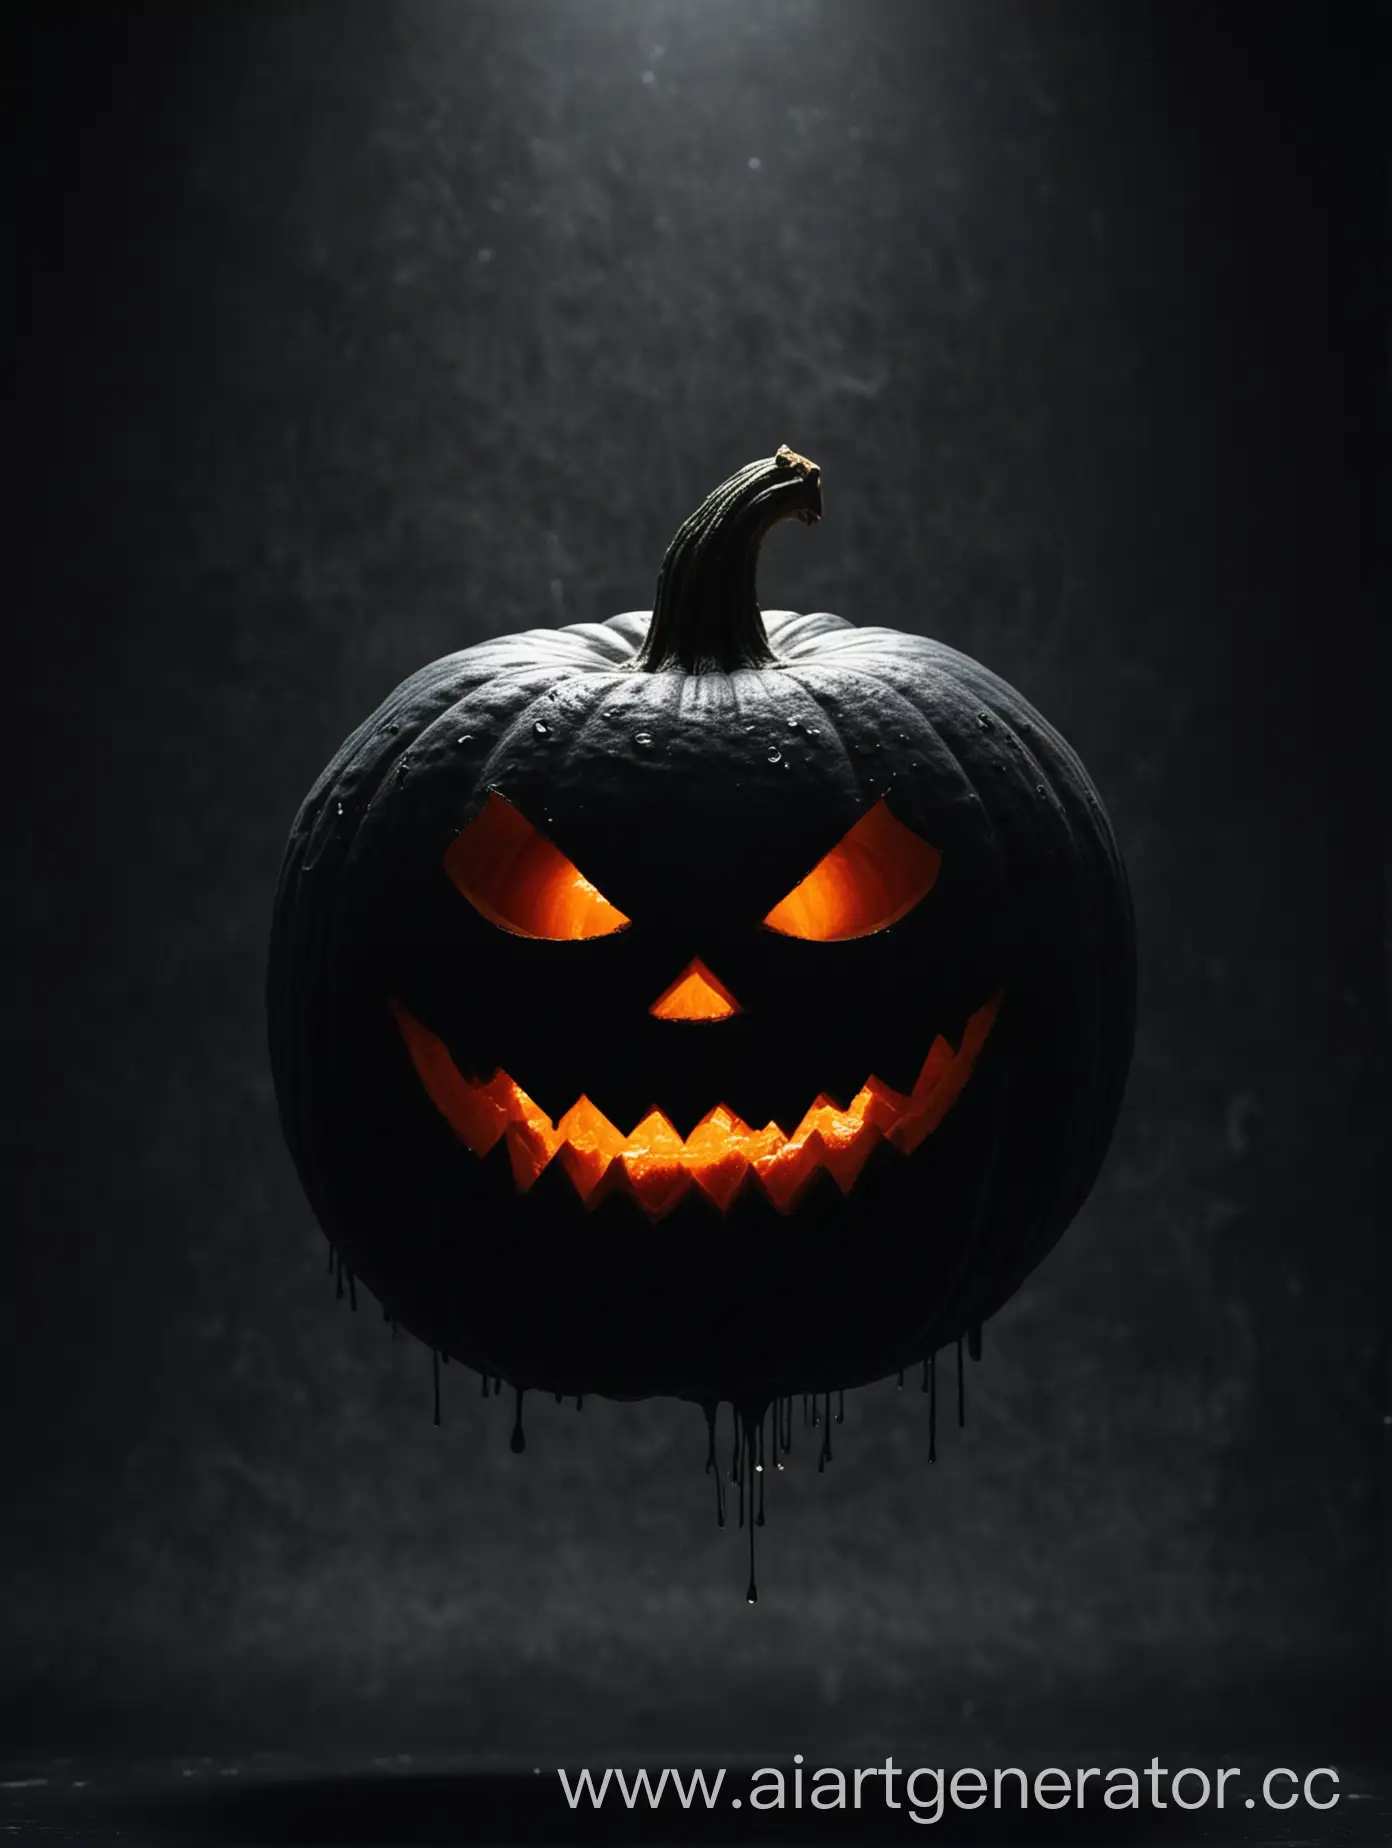 Spooky-Halloween-Pumpkin-in-Dark-Space-with-Blood-Droplet